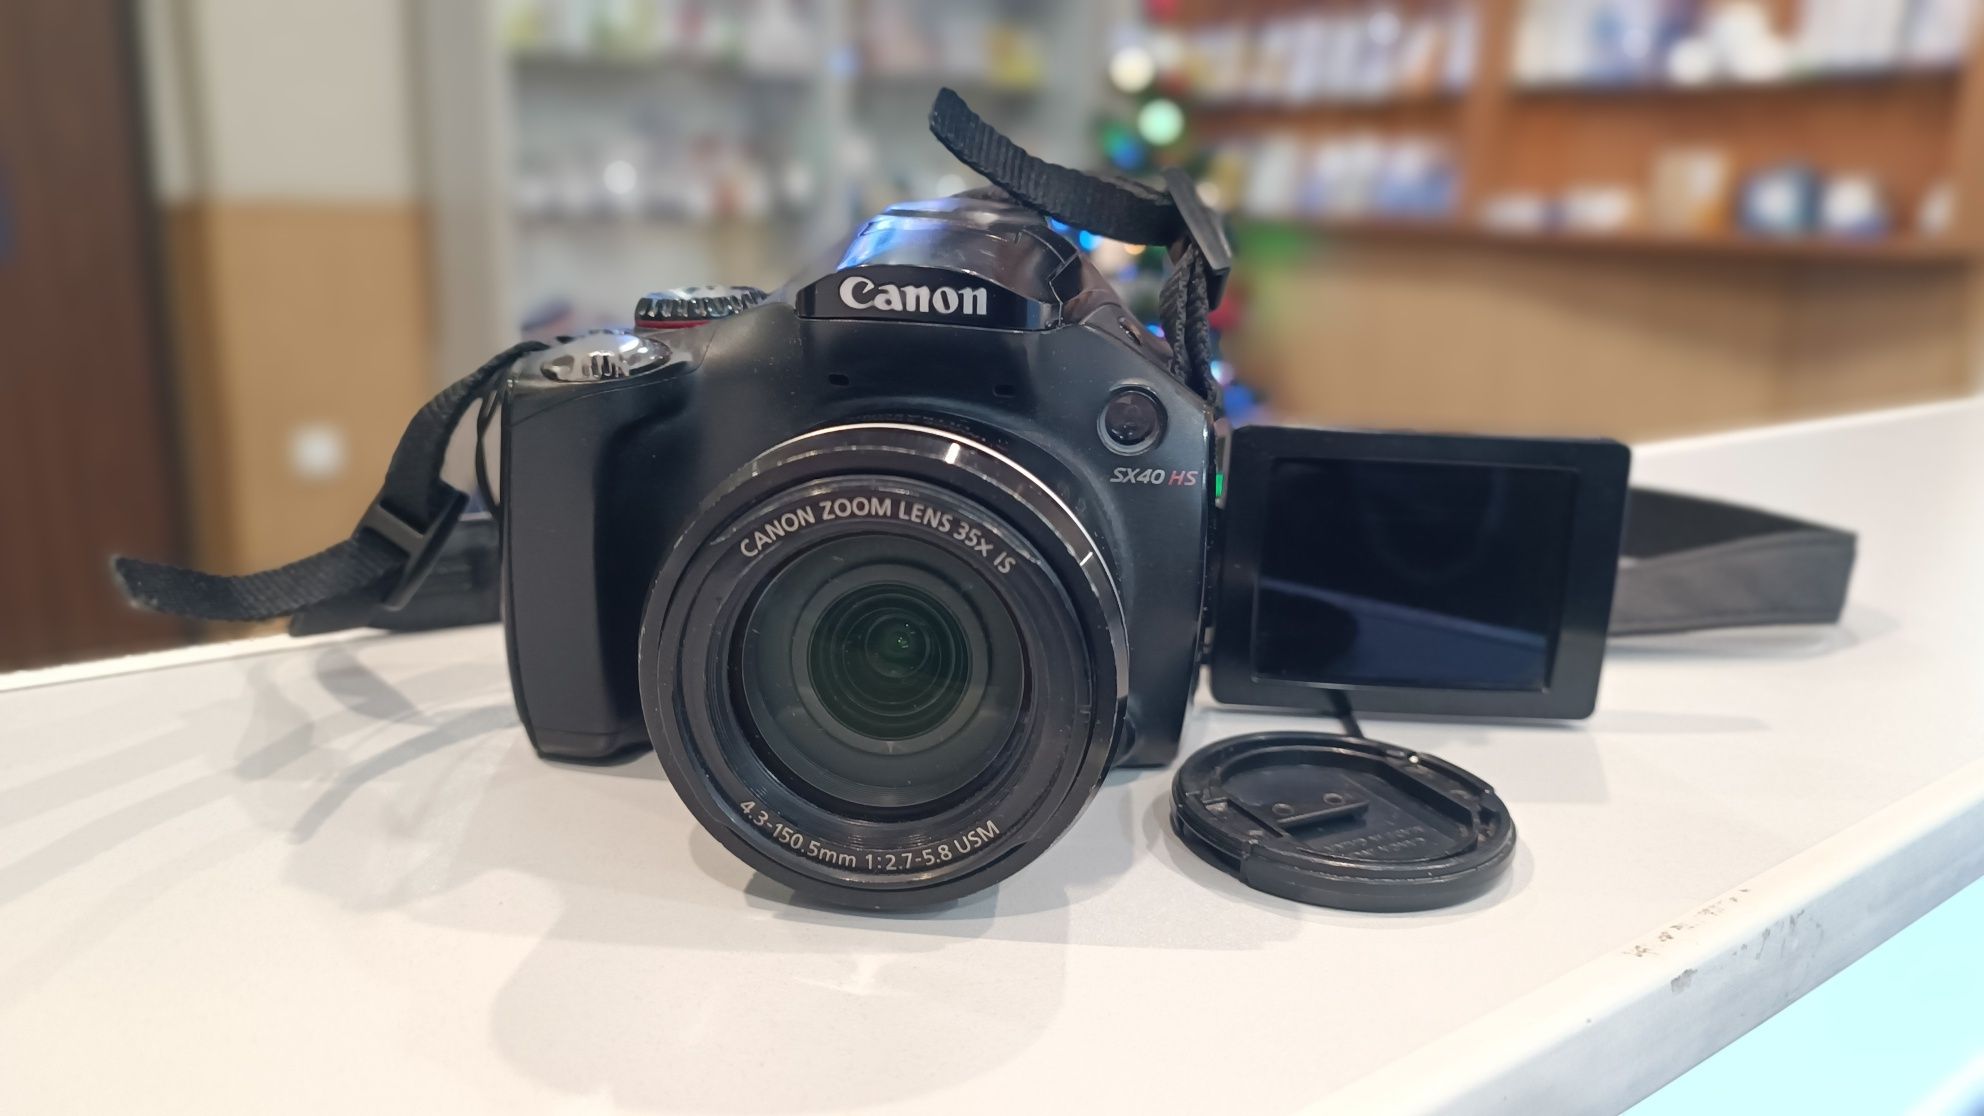 Продам Canon PowerShot SX40 HS